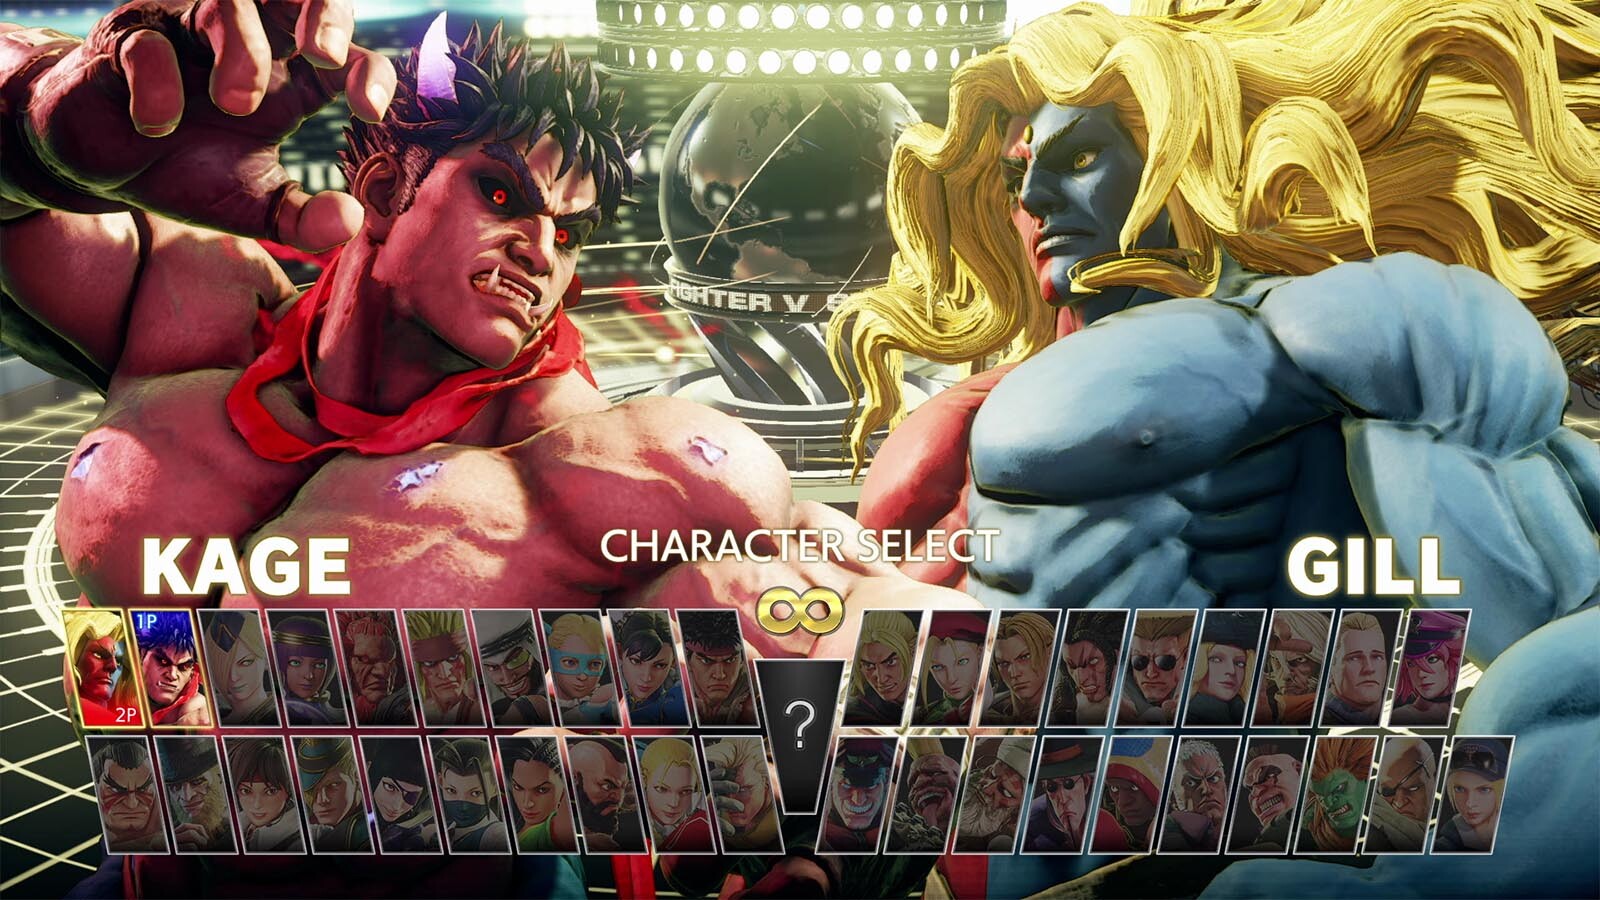 Buy Street Fighter V (Champion Edition) PC Steam key! Cheap price